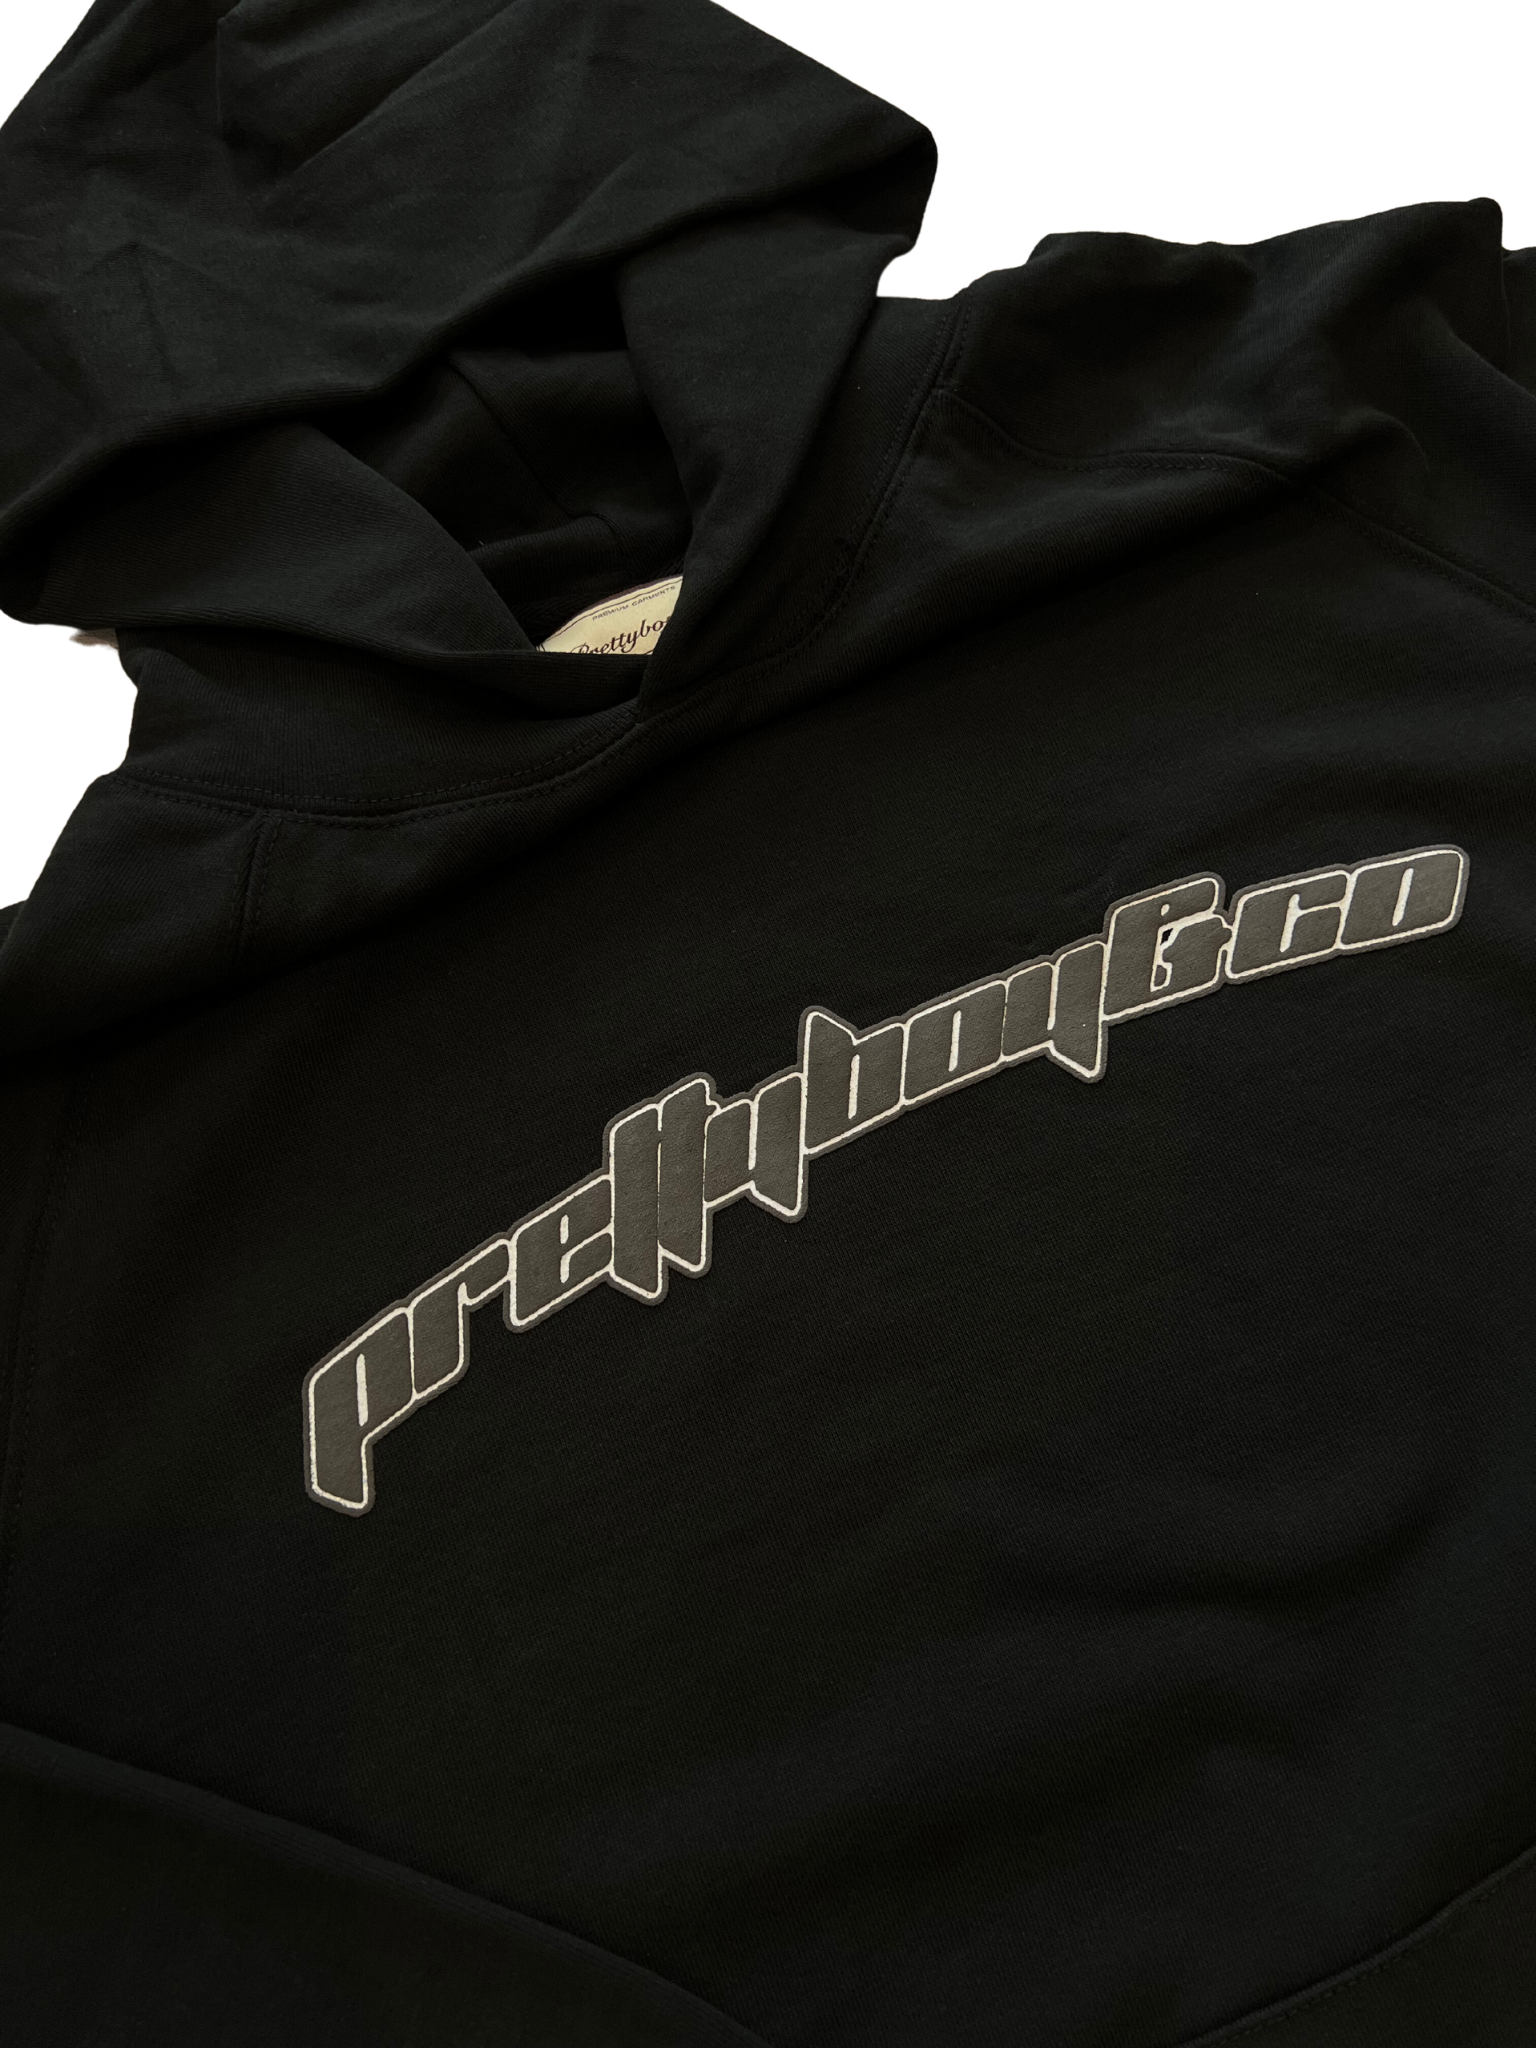 X Black Hooded Sweatshirt (QuickStrike)